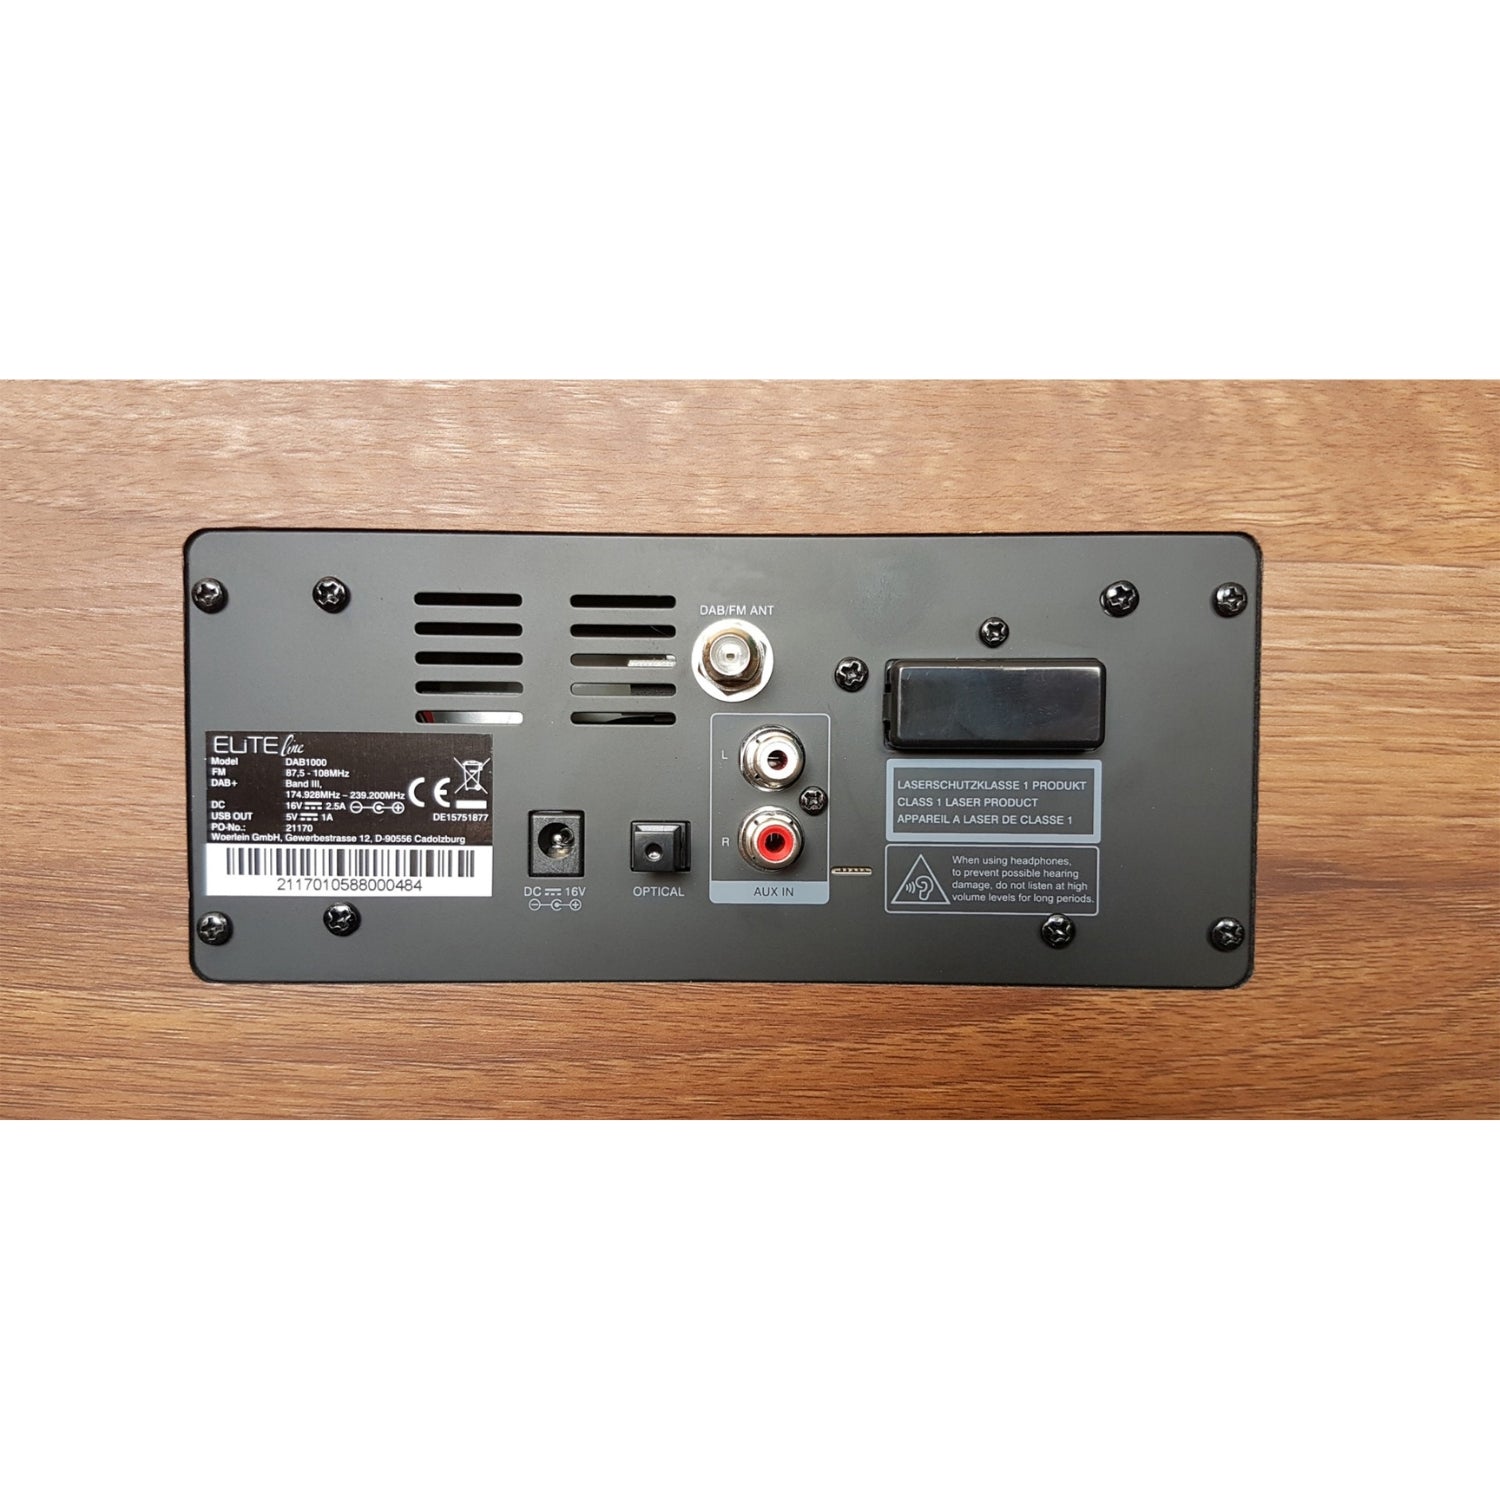 Soundmaster HighLine DAB1000 stereo system HiFi system DAB+ FM CD MP3 USB Bluetooth streaming Optical input 75 ohm antenna